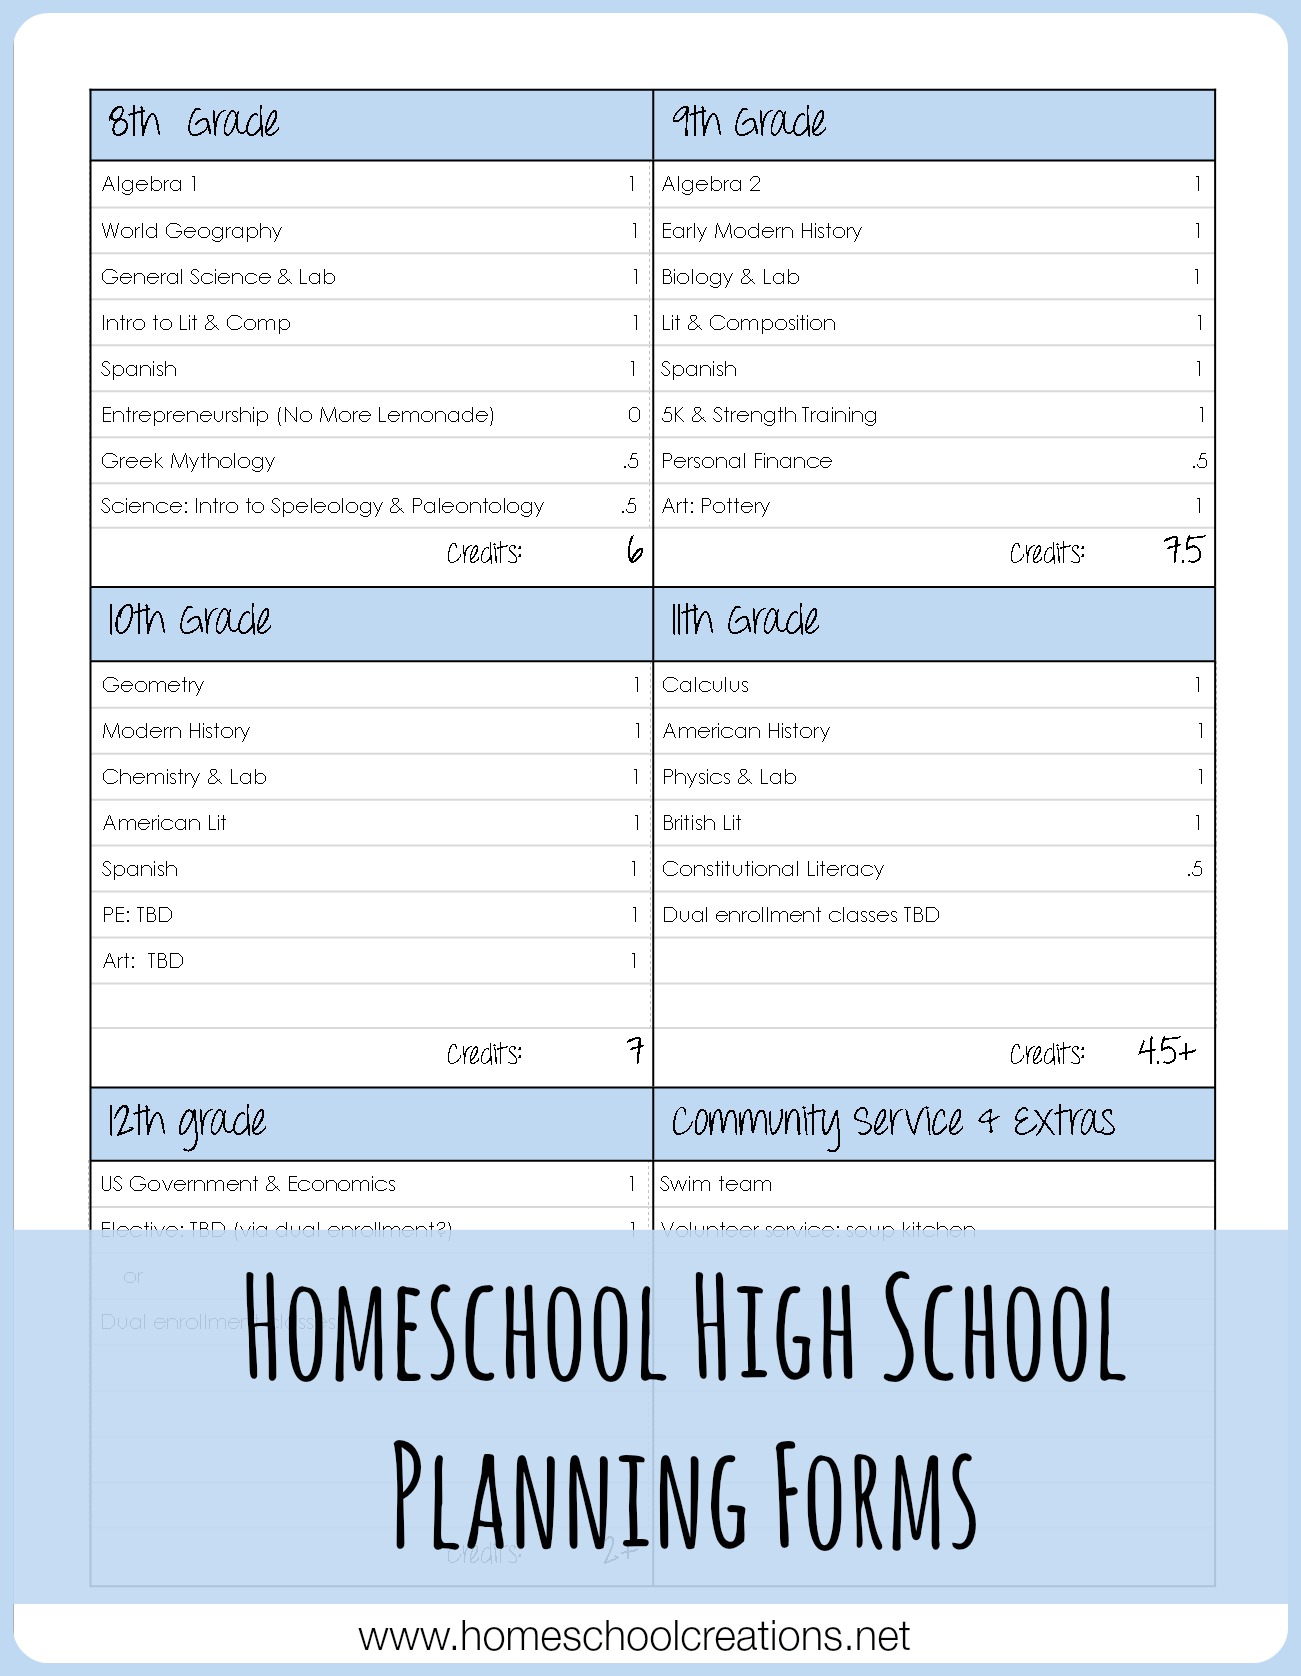 Mapping out a homeschool high school plan